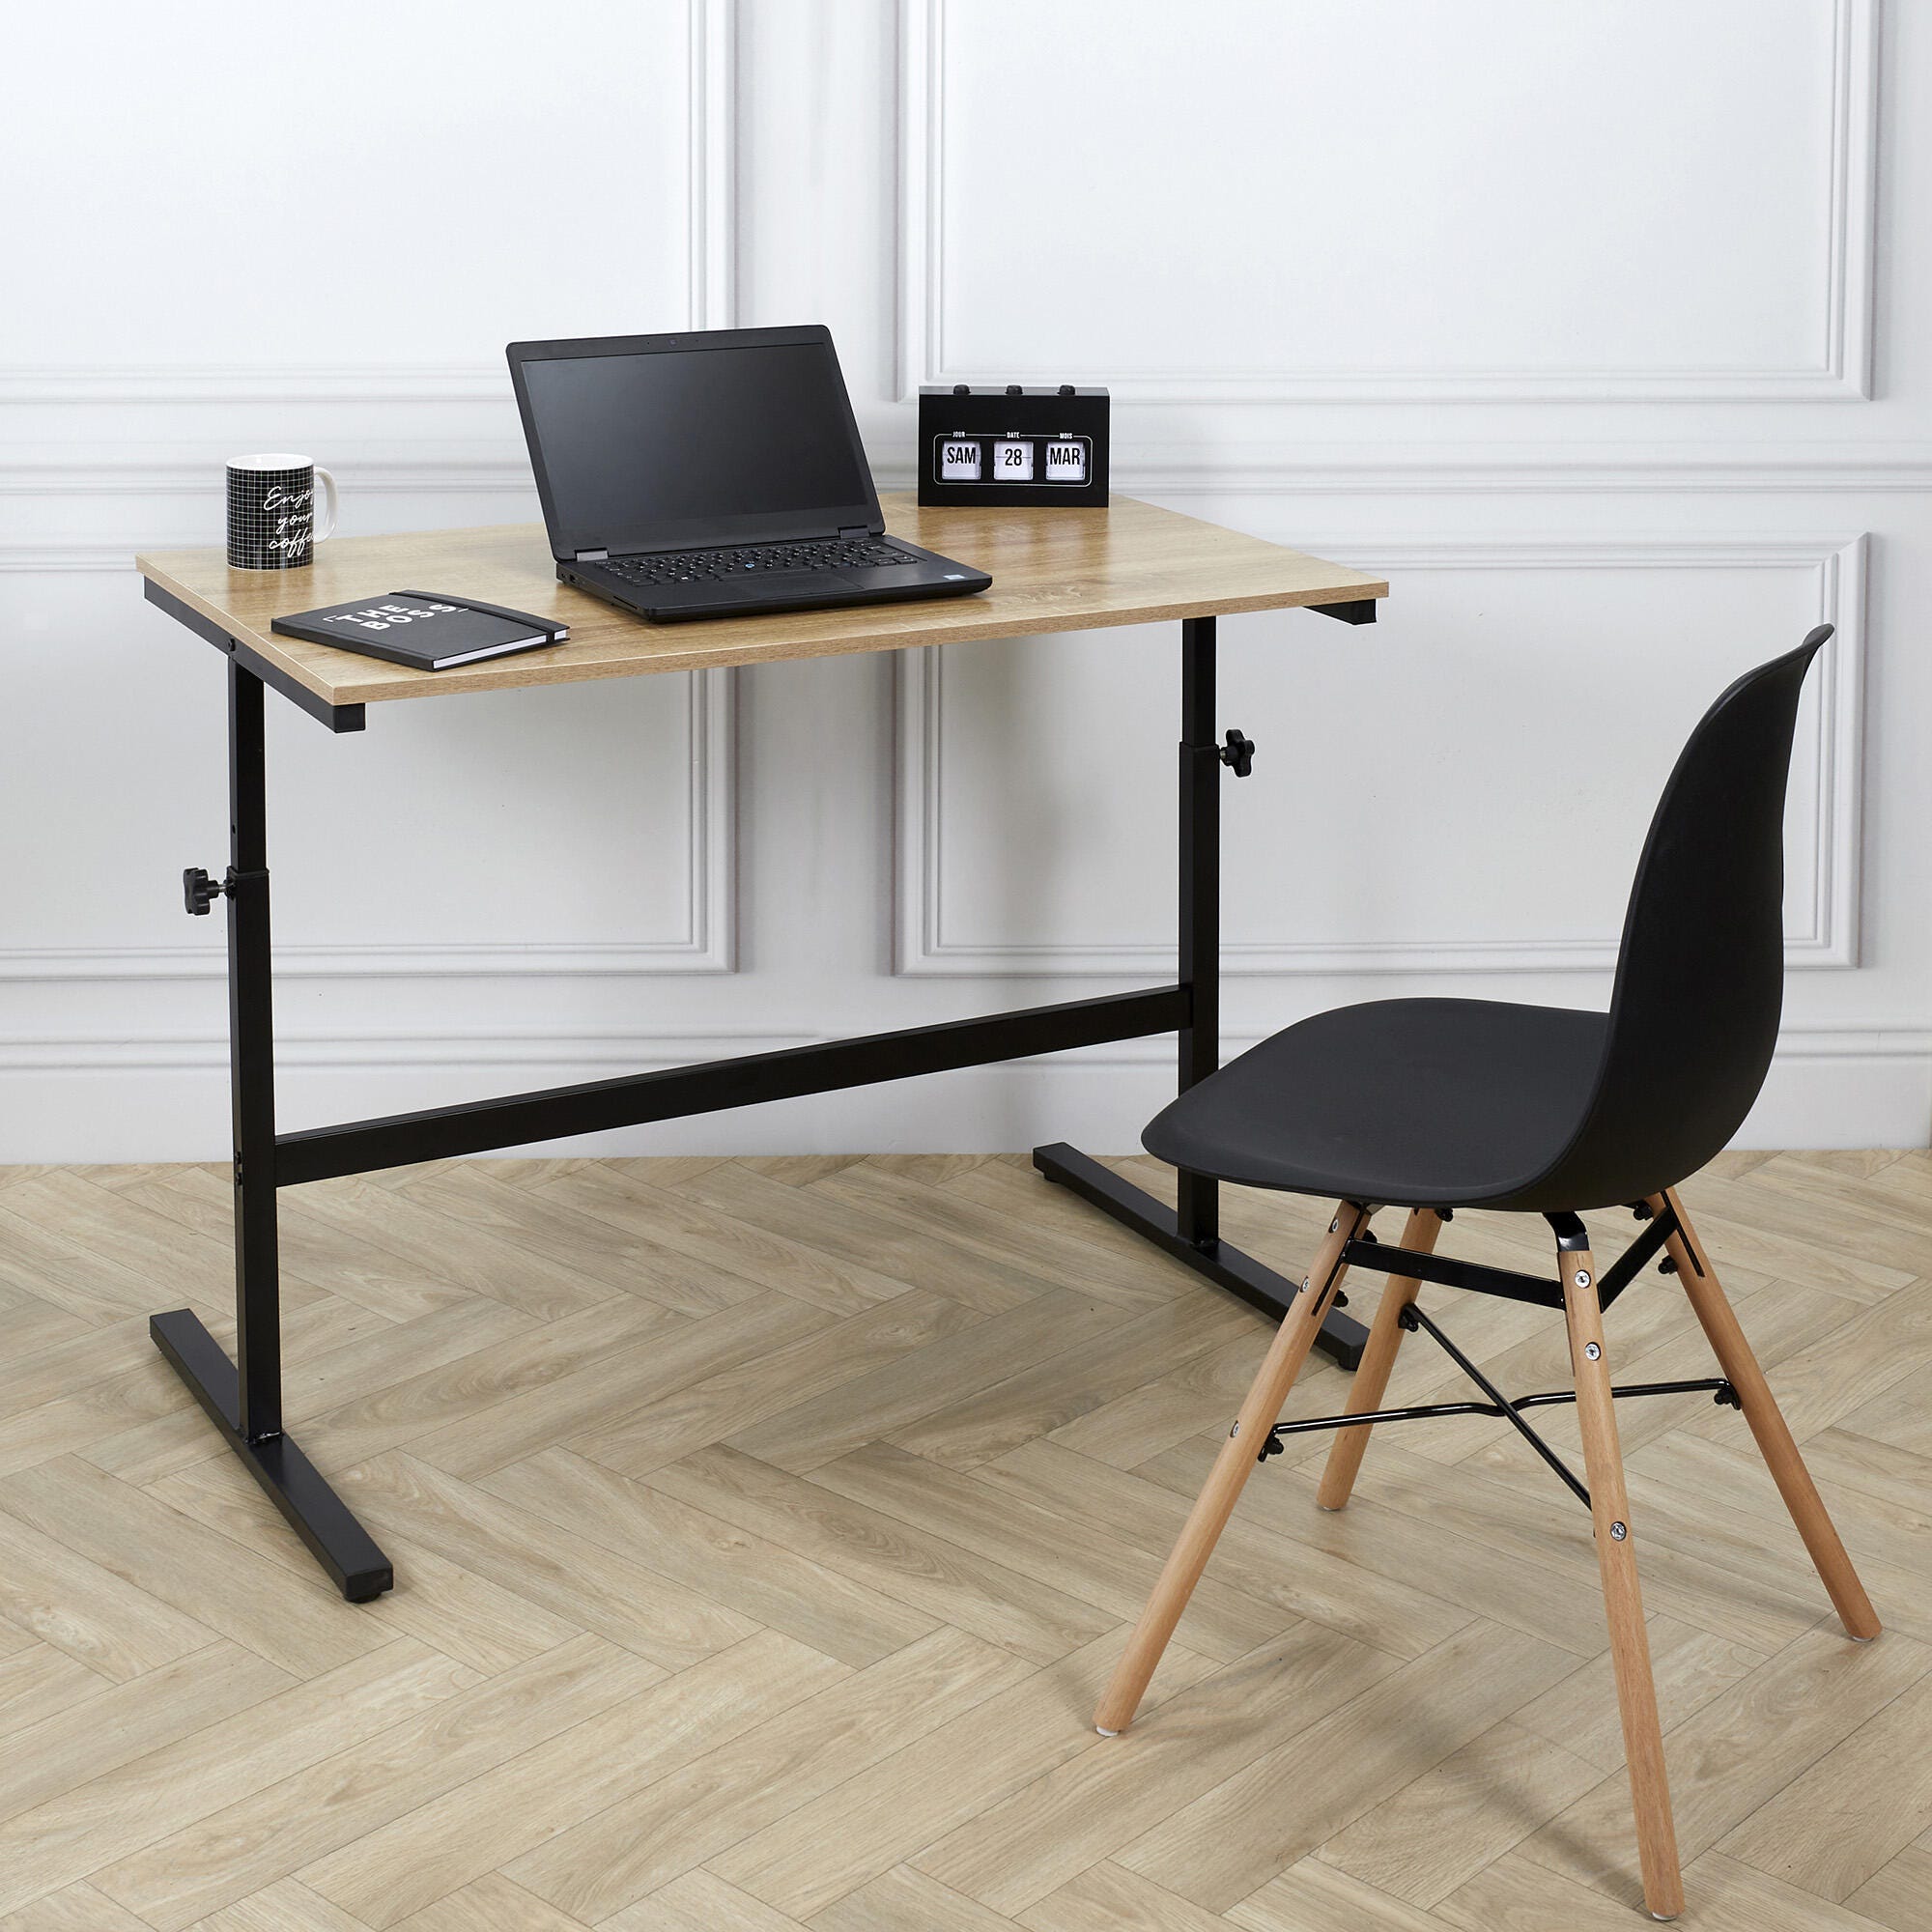 Mesa de escritorio plegable madera color natural